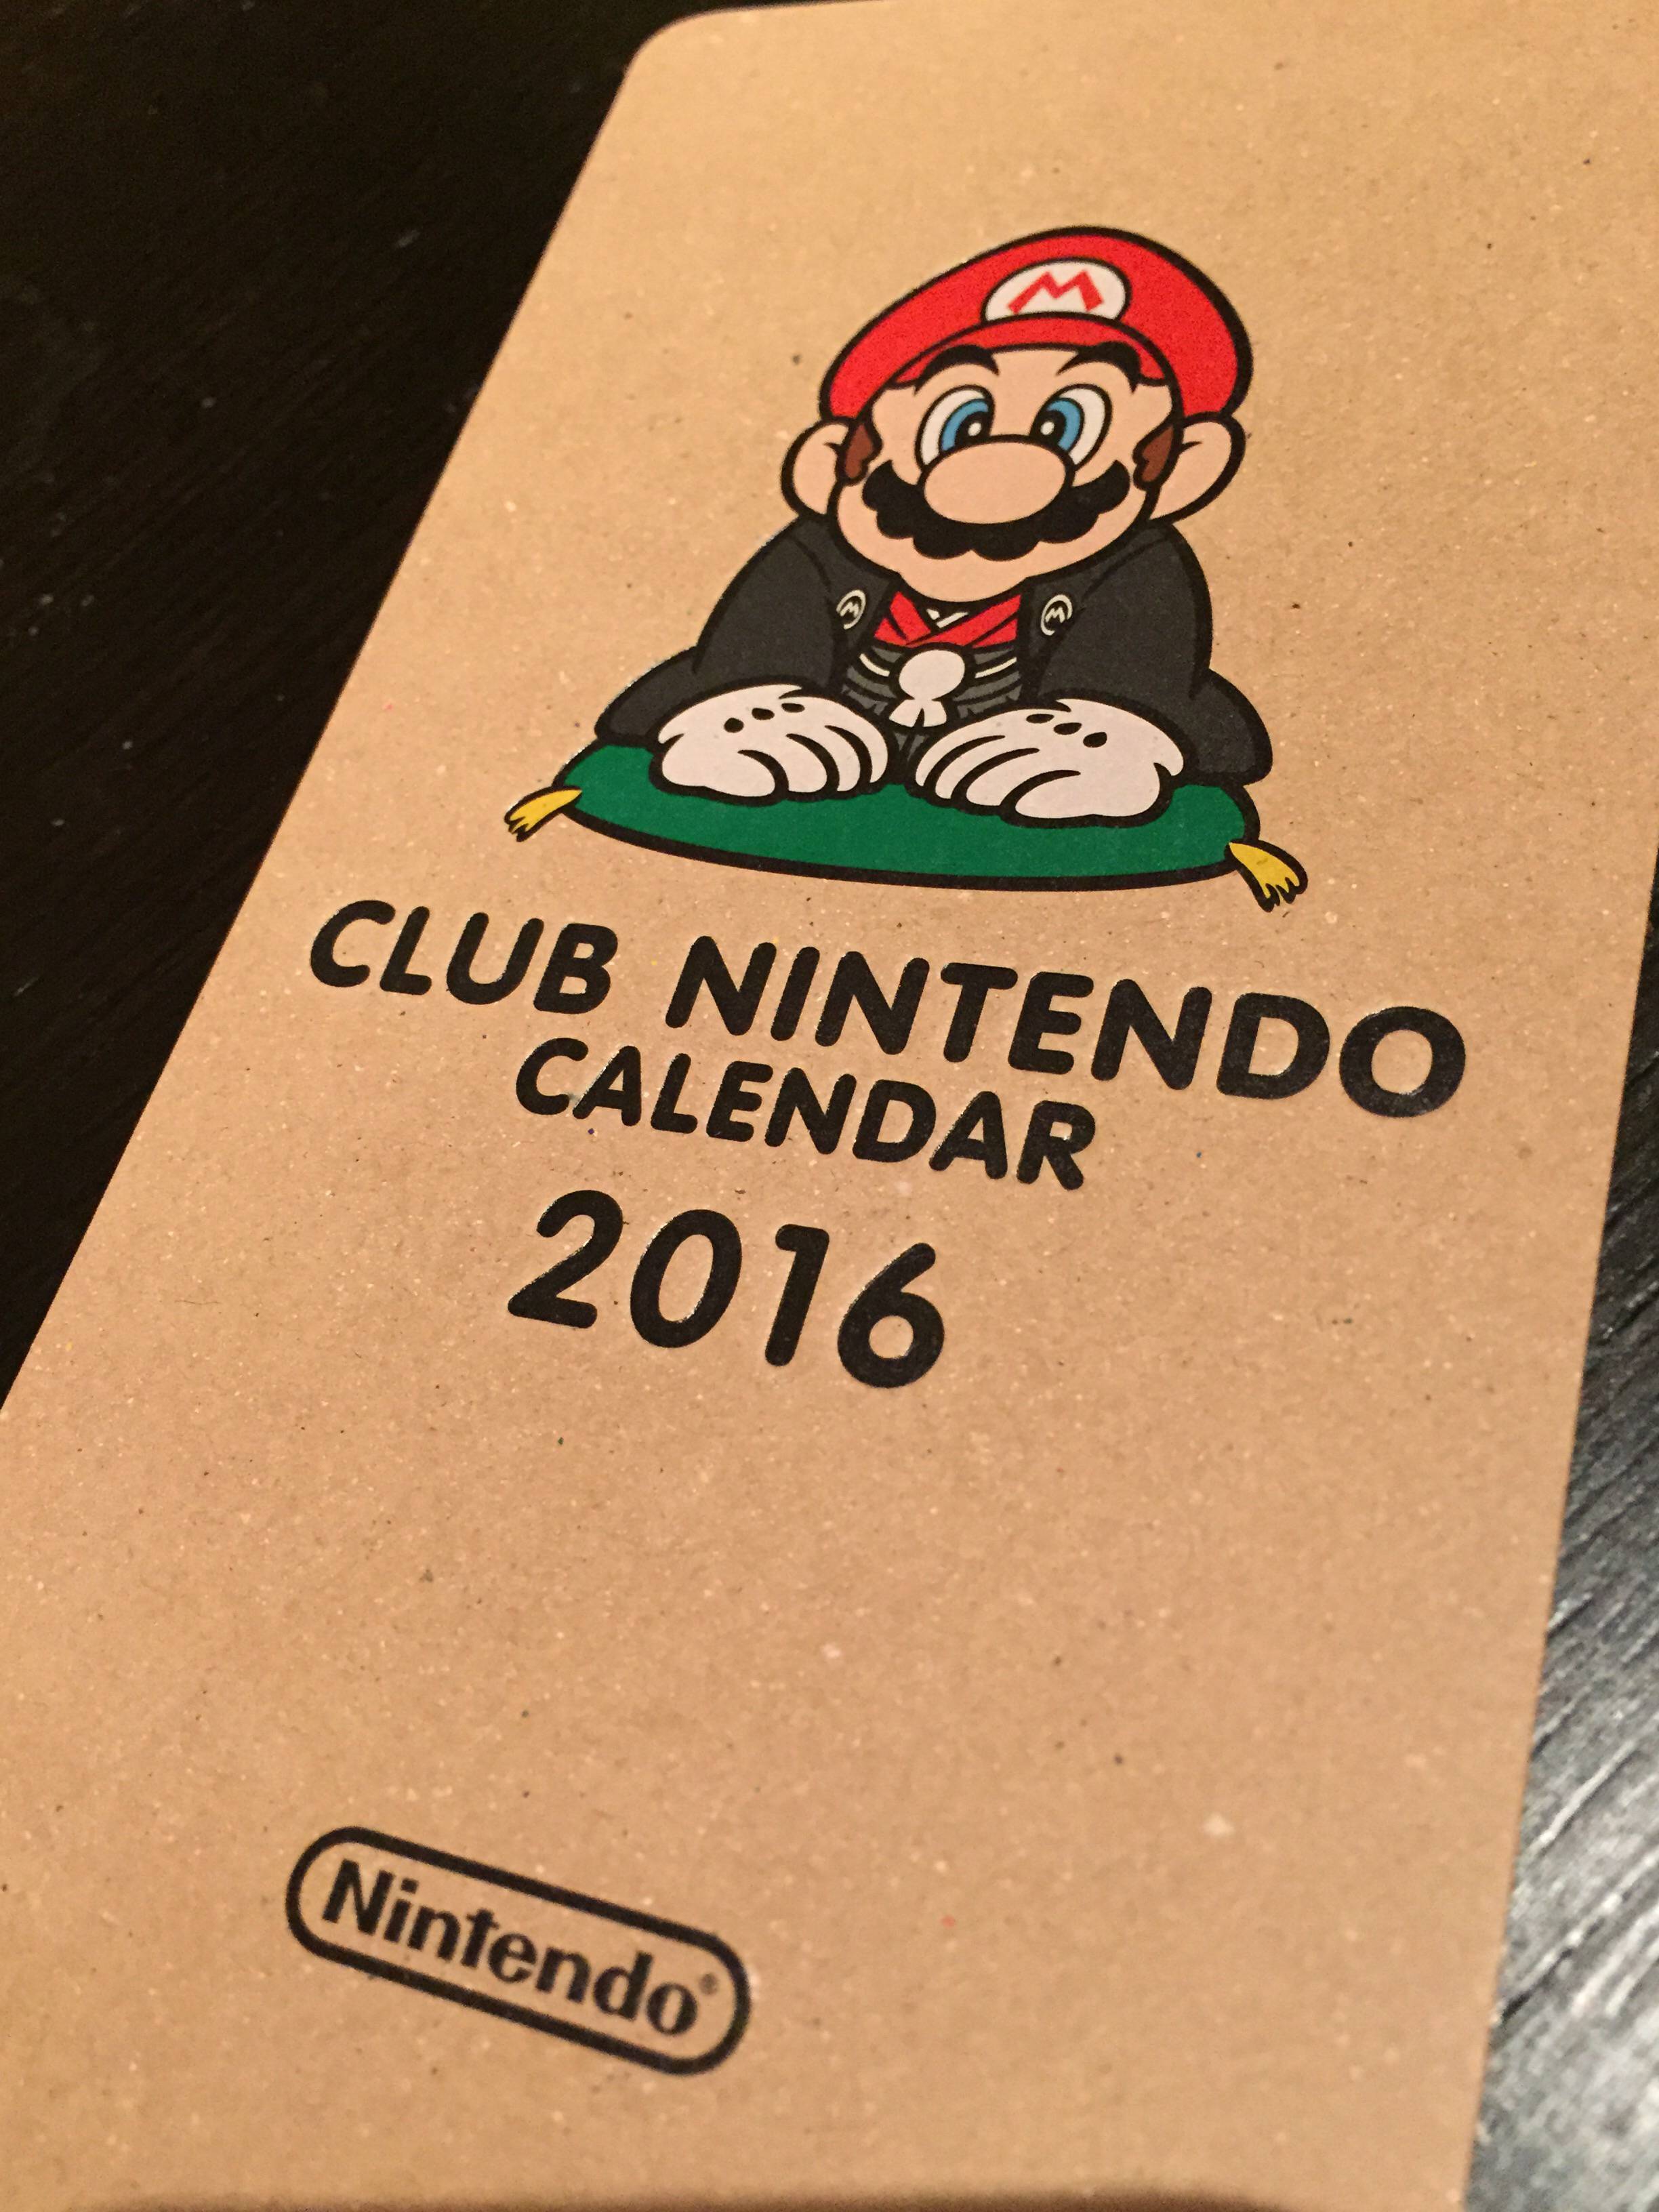 Photos of the Club Nintendo Calendar 2016